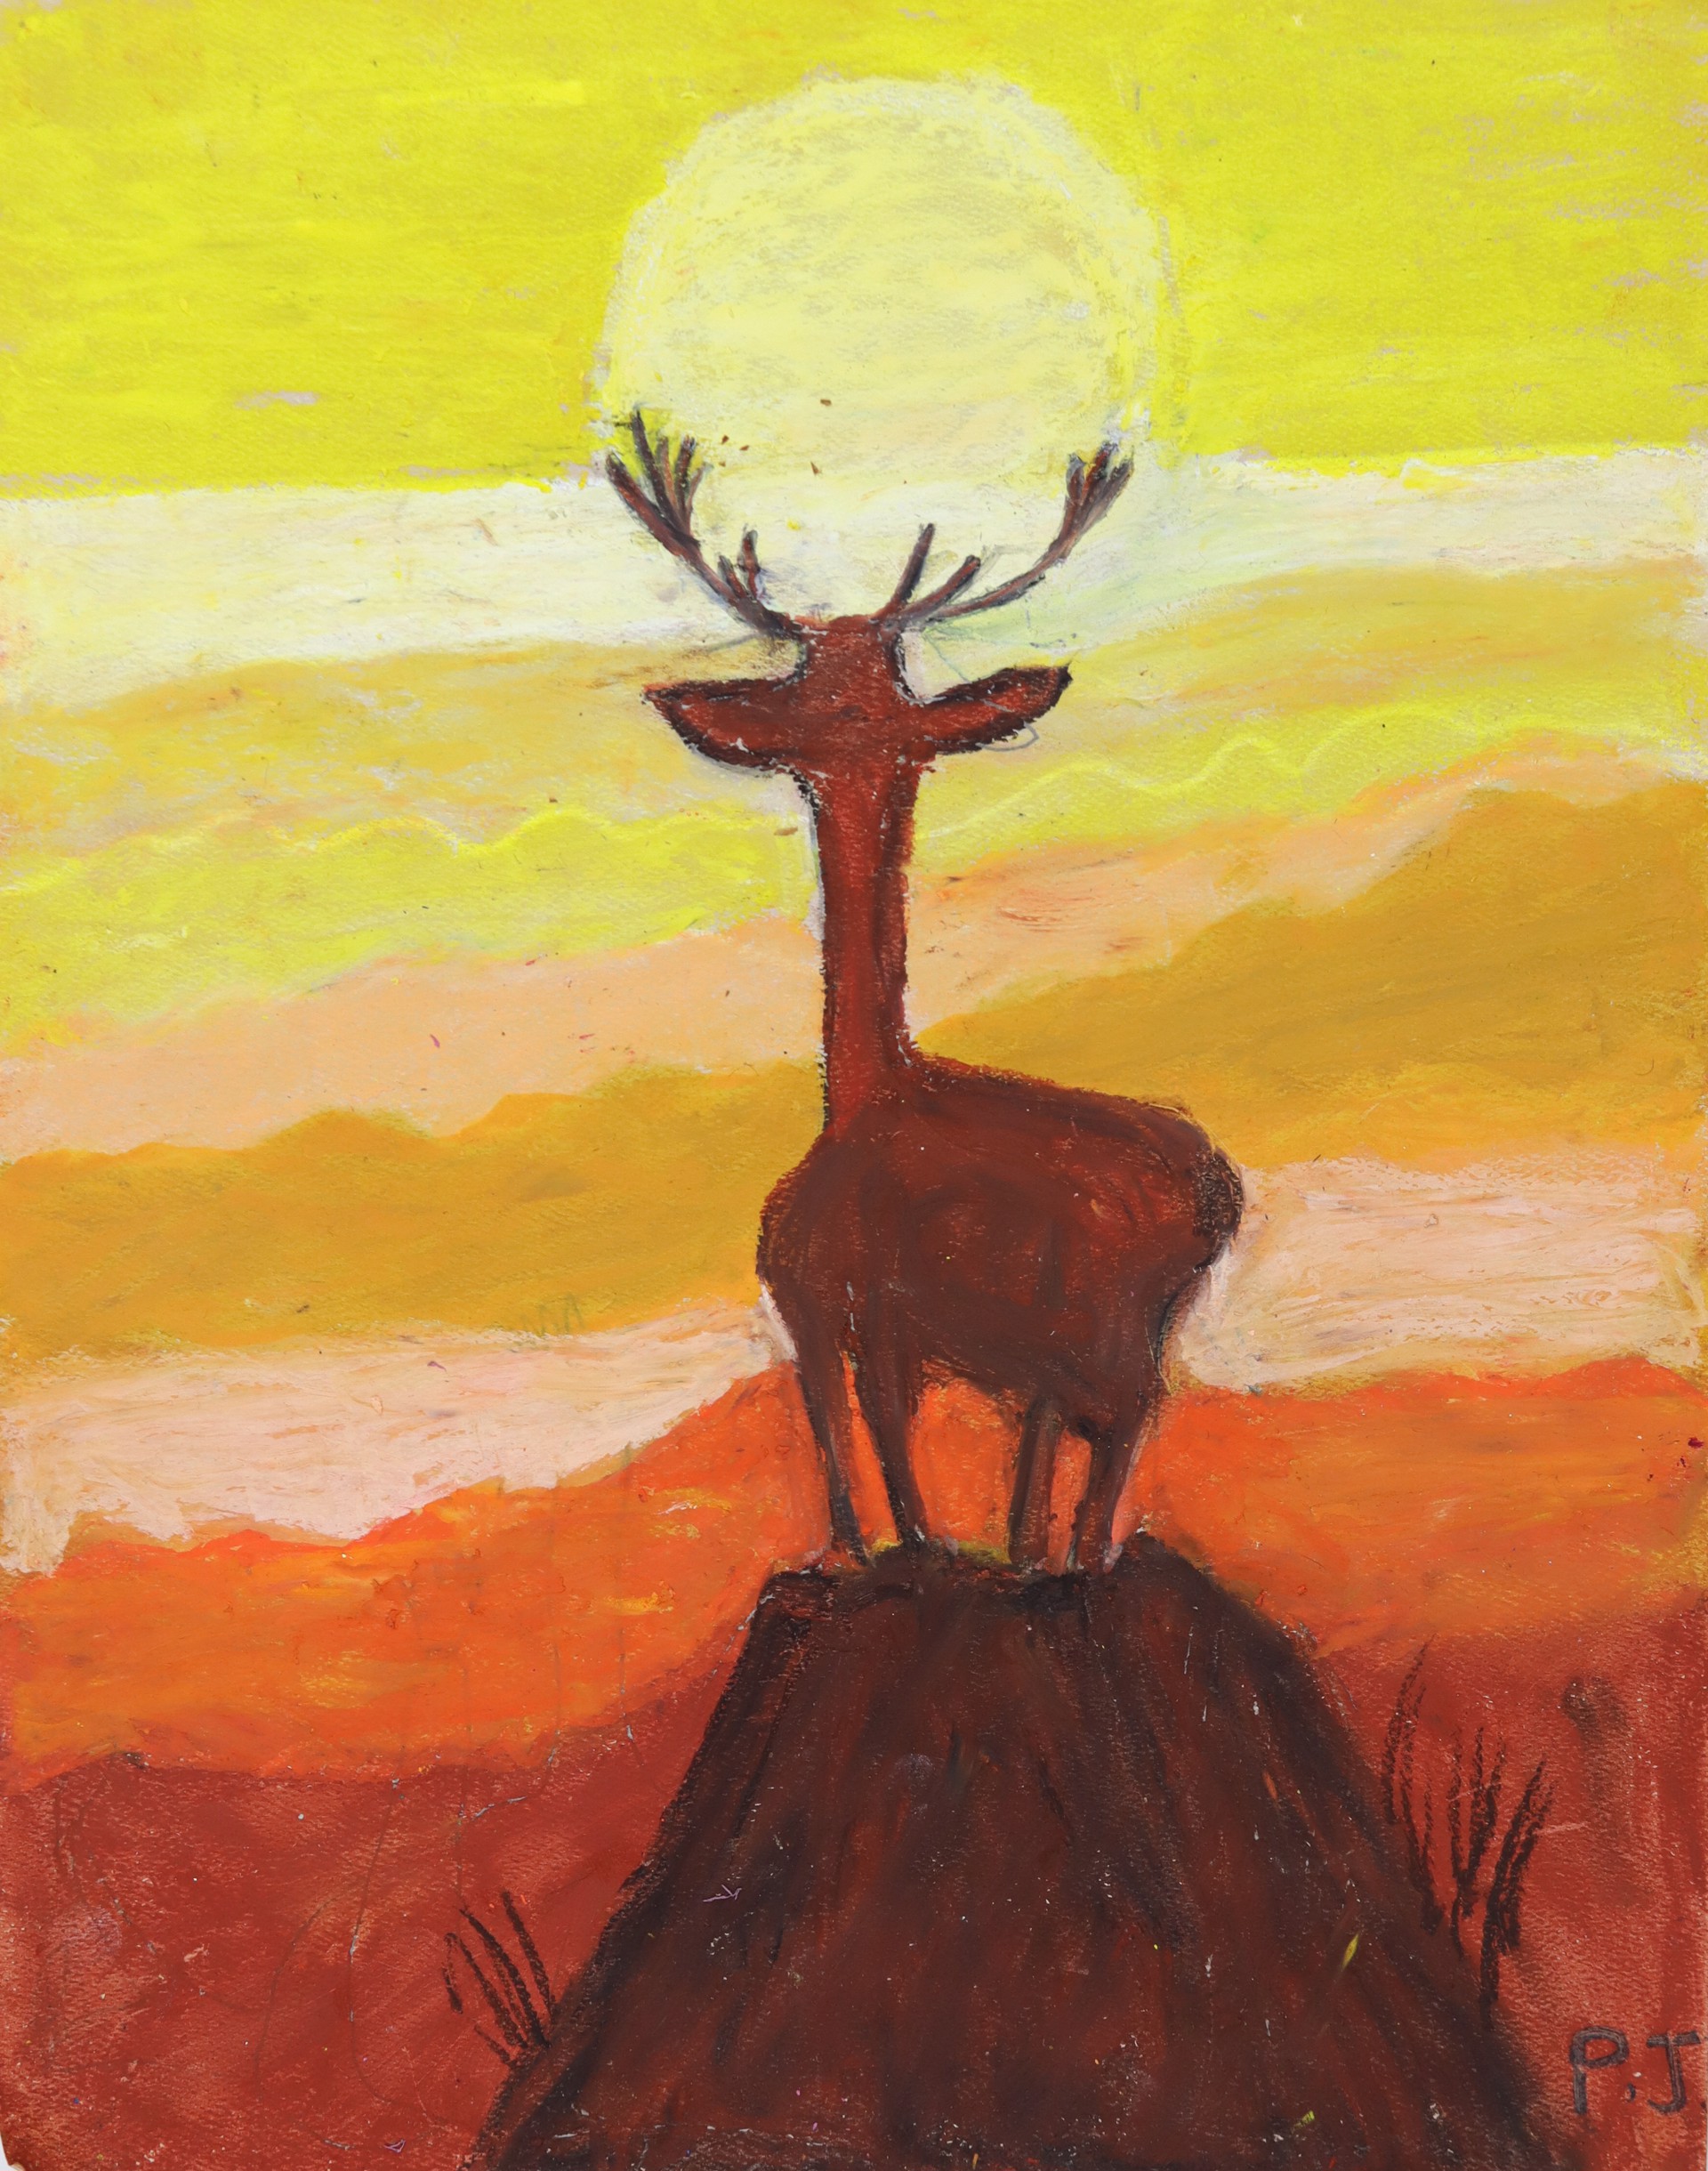 A Deer at Sunset by Payman Jazini